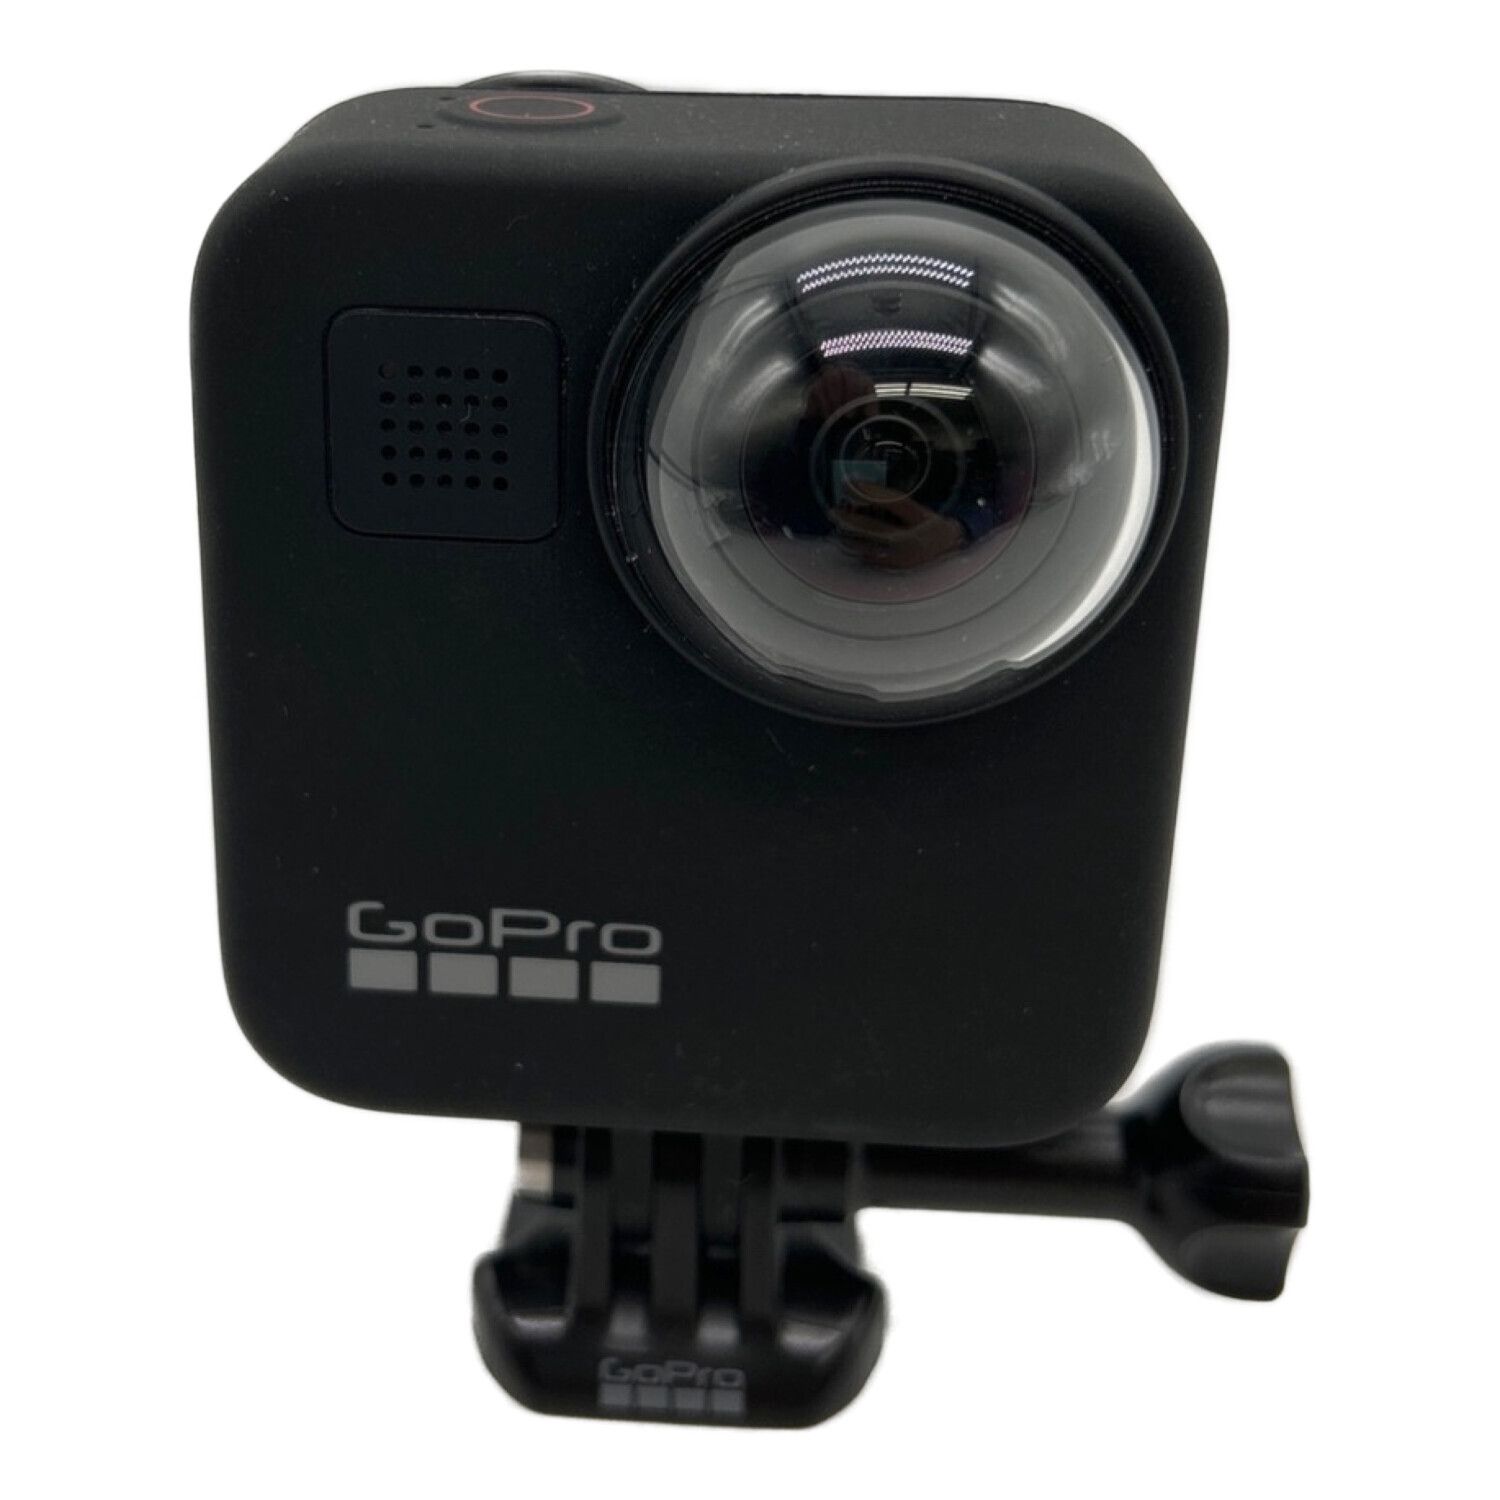 GoPro (ゴープロ) ウェアラブルカメラ 予備バッテリー付 360度撮影